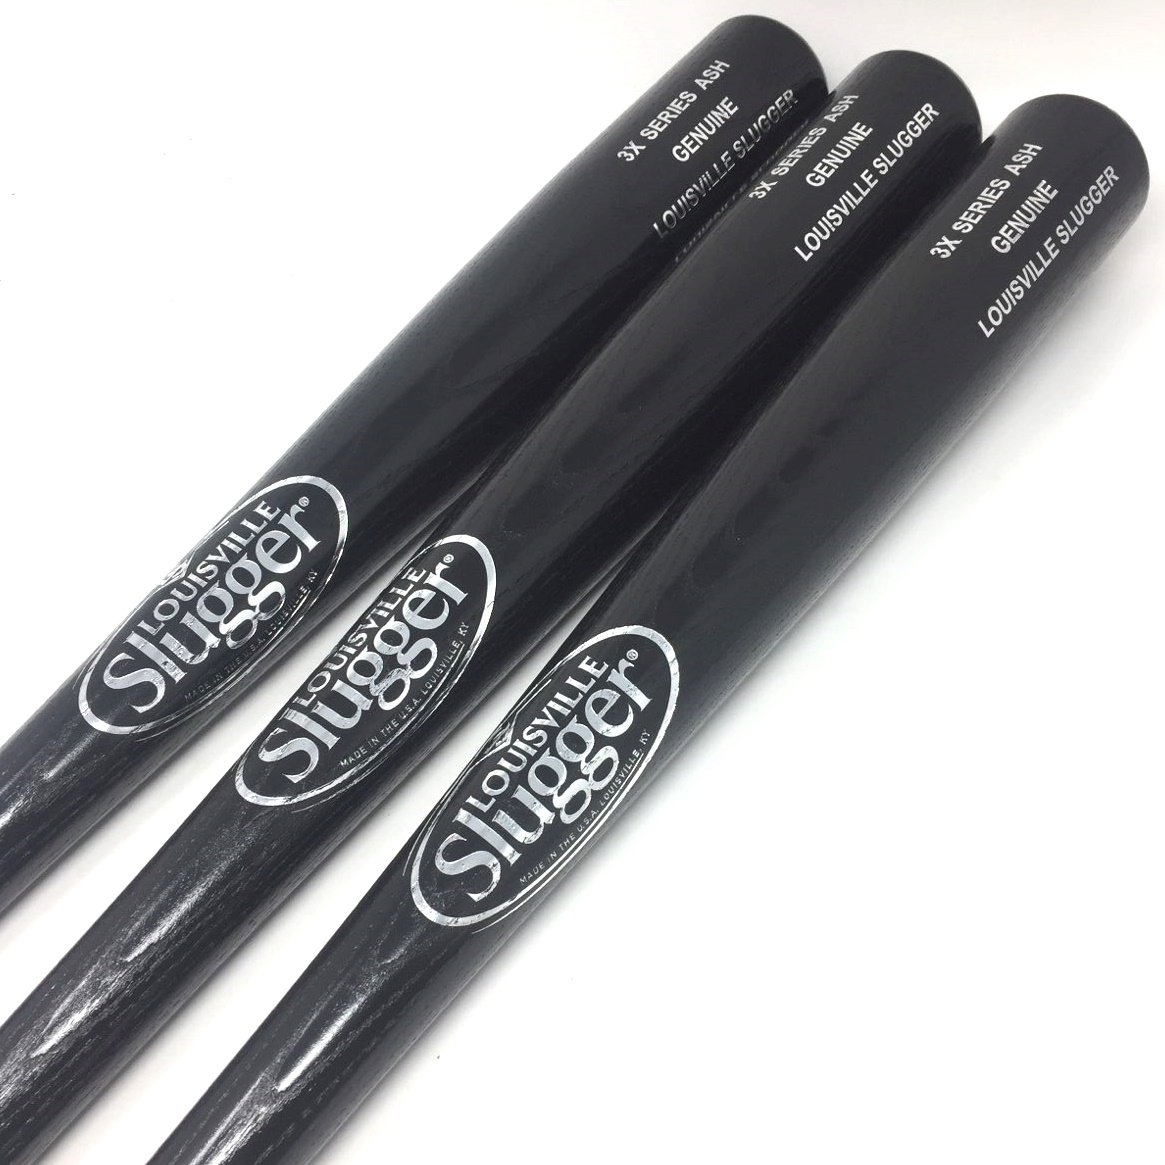 louisville-slugger-wood-baseball-bat-pack-33-inch-3-bats-s3-ash BATPACK-0015 Louisville Does not apply <p>33 inch wood baseball bats by Louisville Slugger. Series 3 Ash